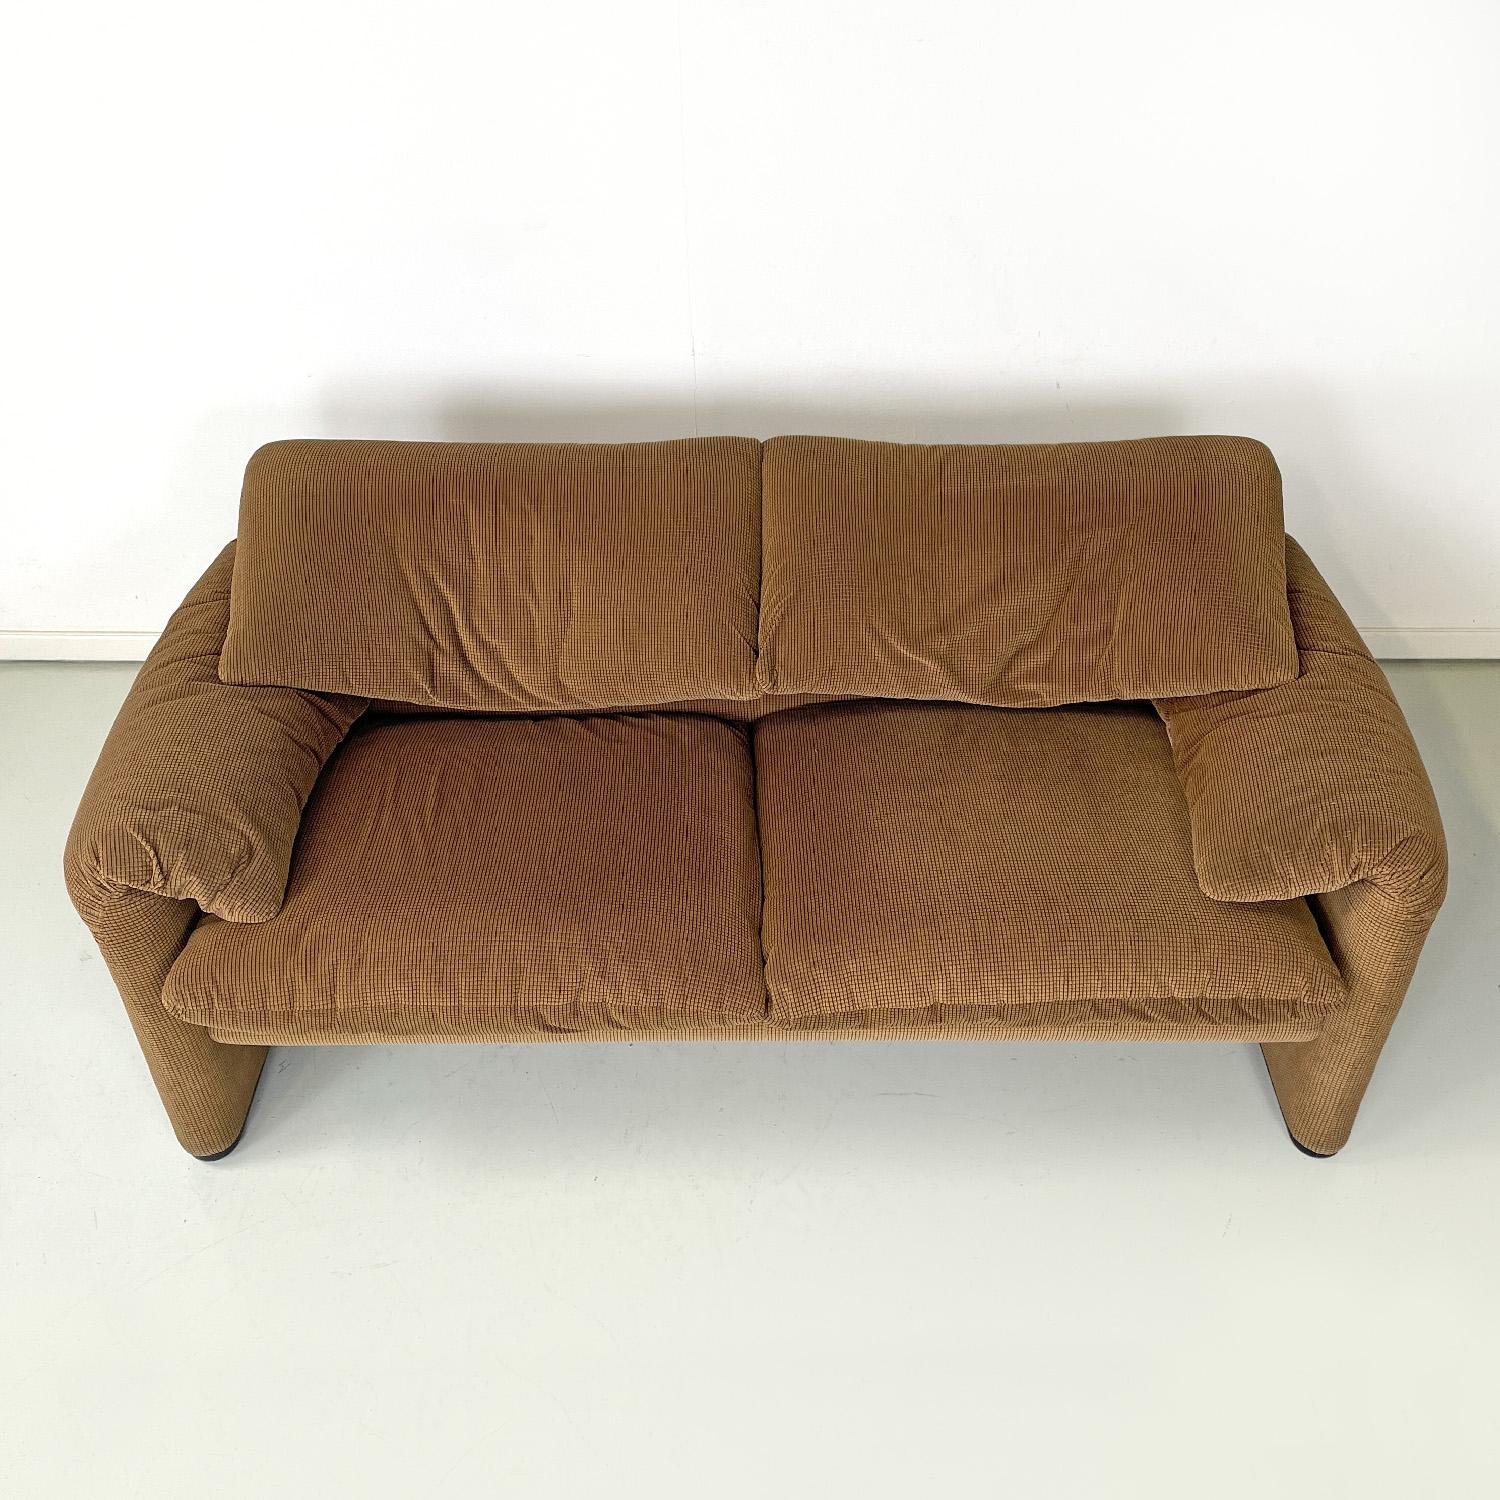 Metal Italian modern brown sofas Maralunga by Vico Magistretti for Cassina, 1973 For Sale